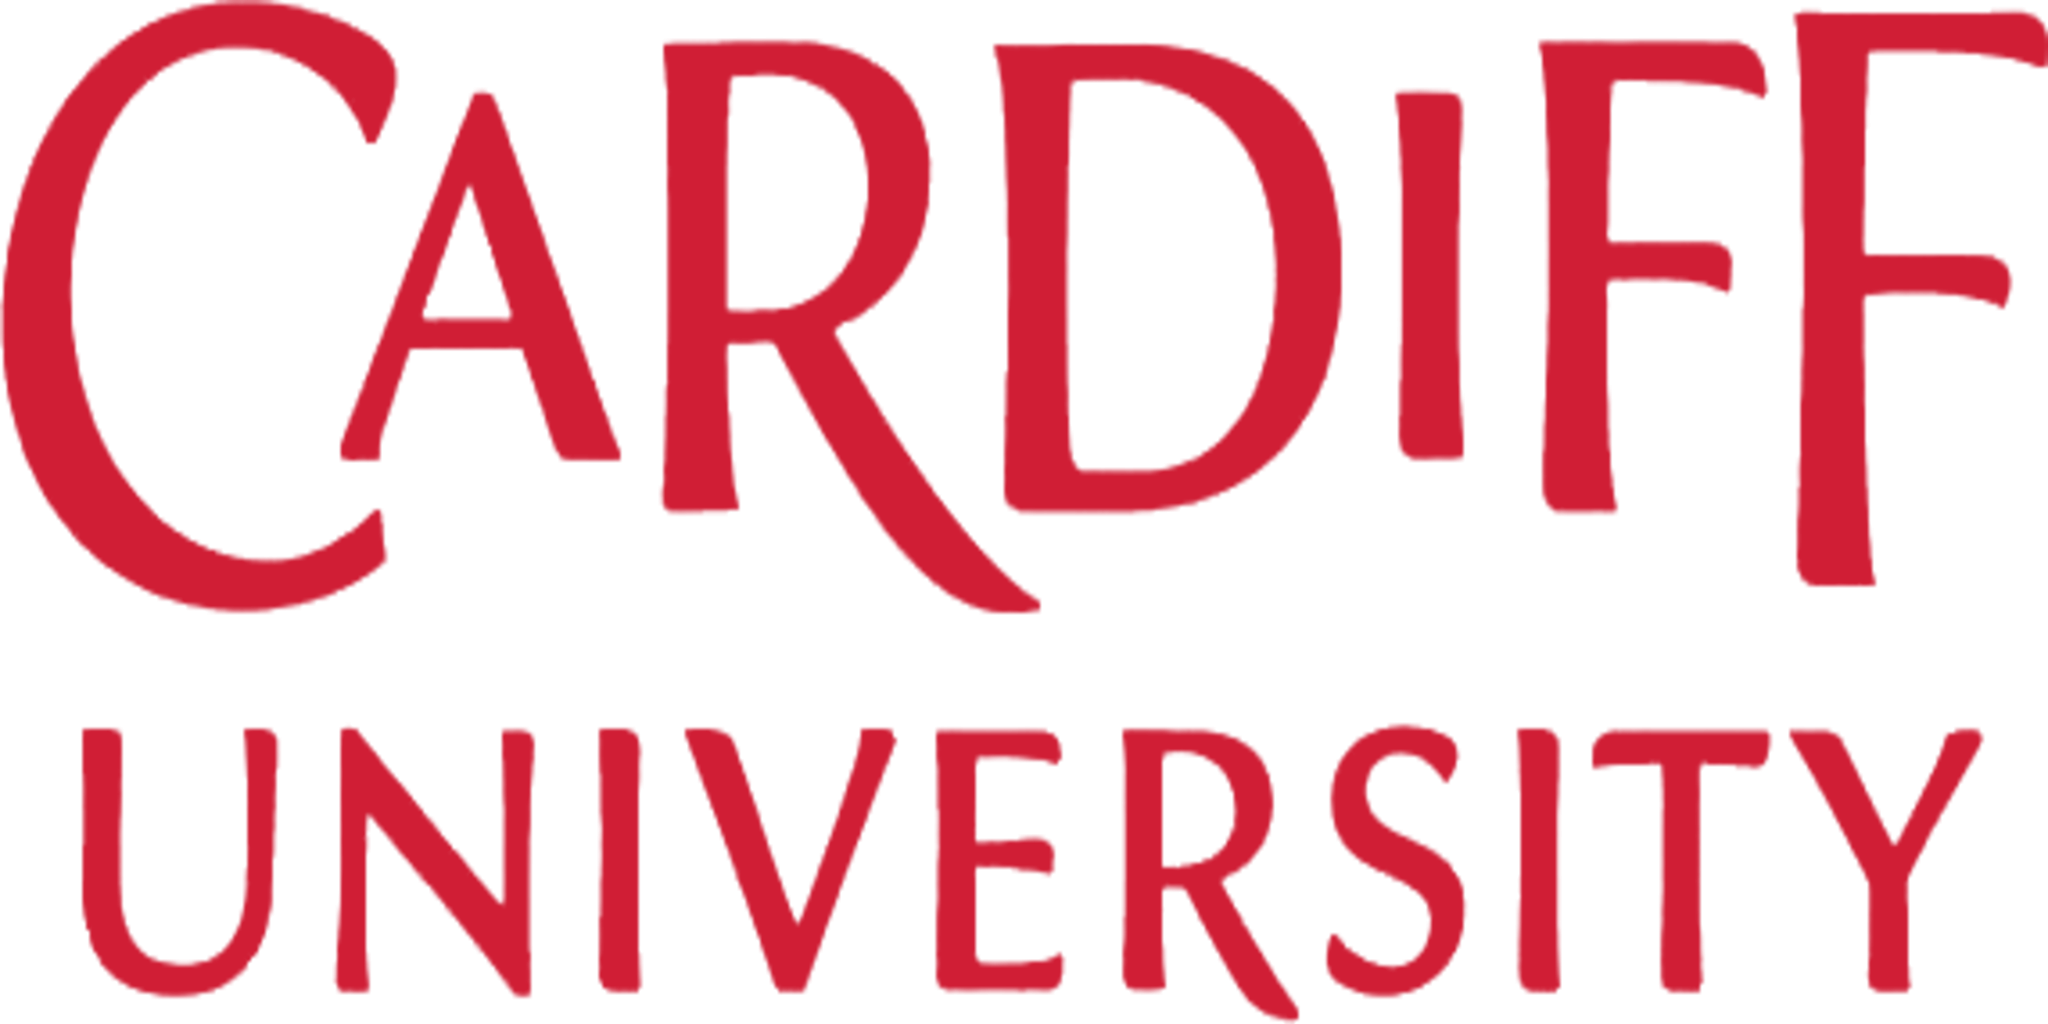 cardiff-university